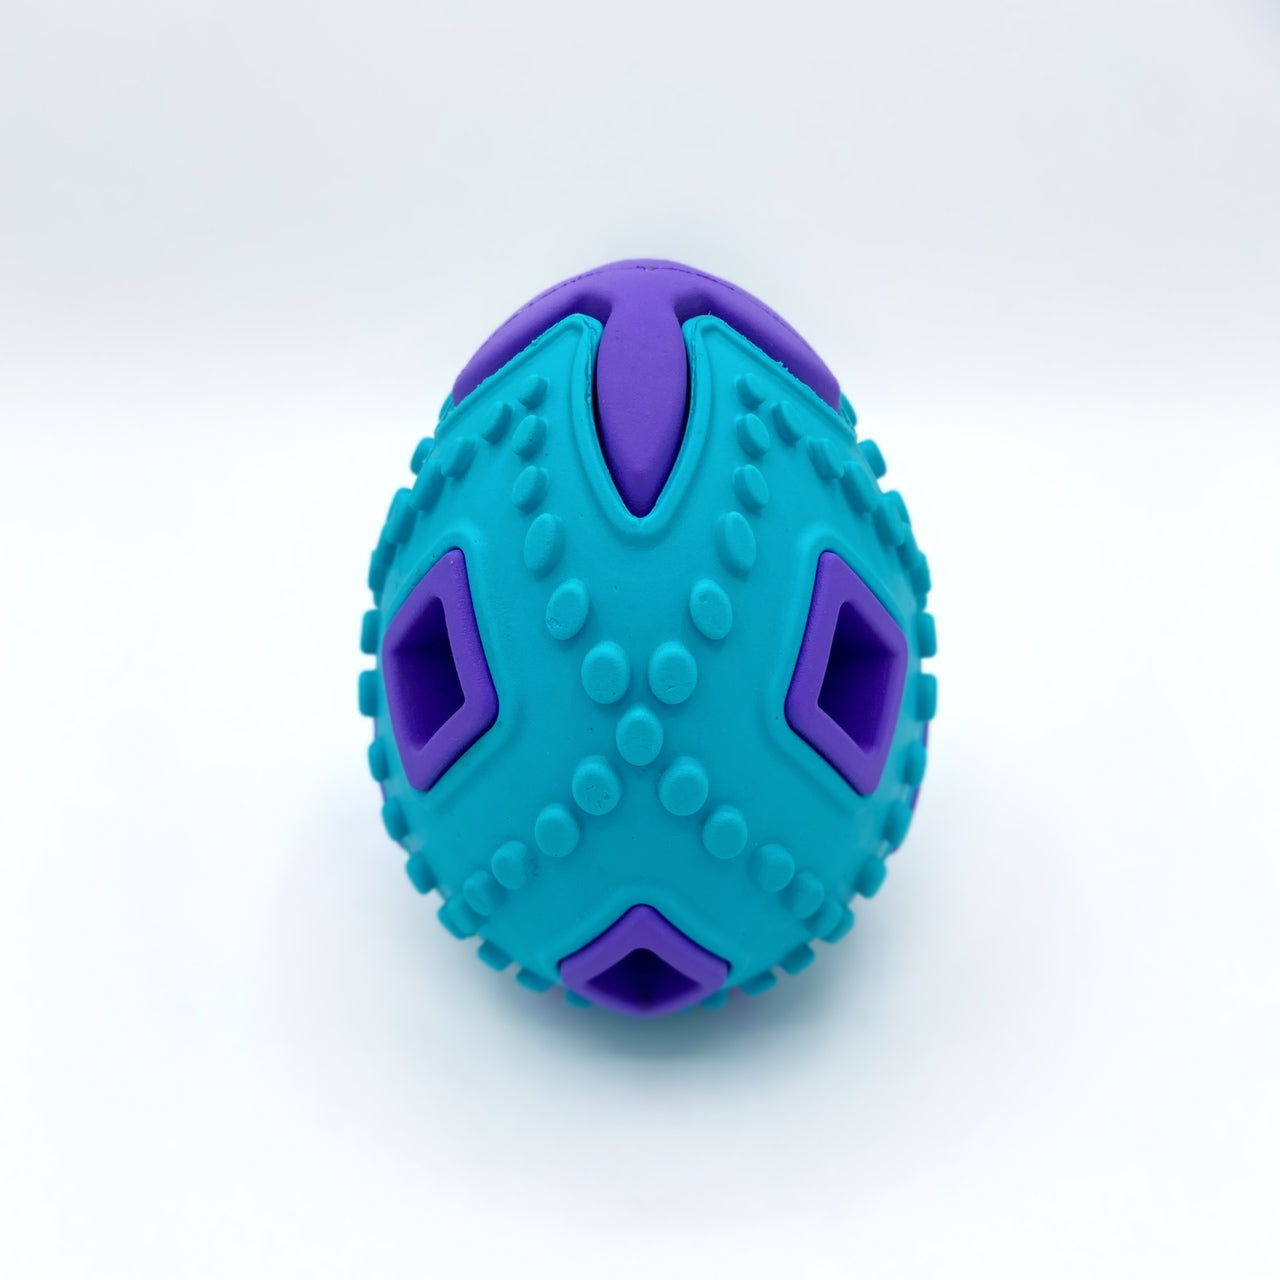 Bud'z Rubber - Astro Blue Egg Dog Toy (2.5")